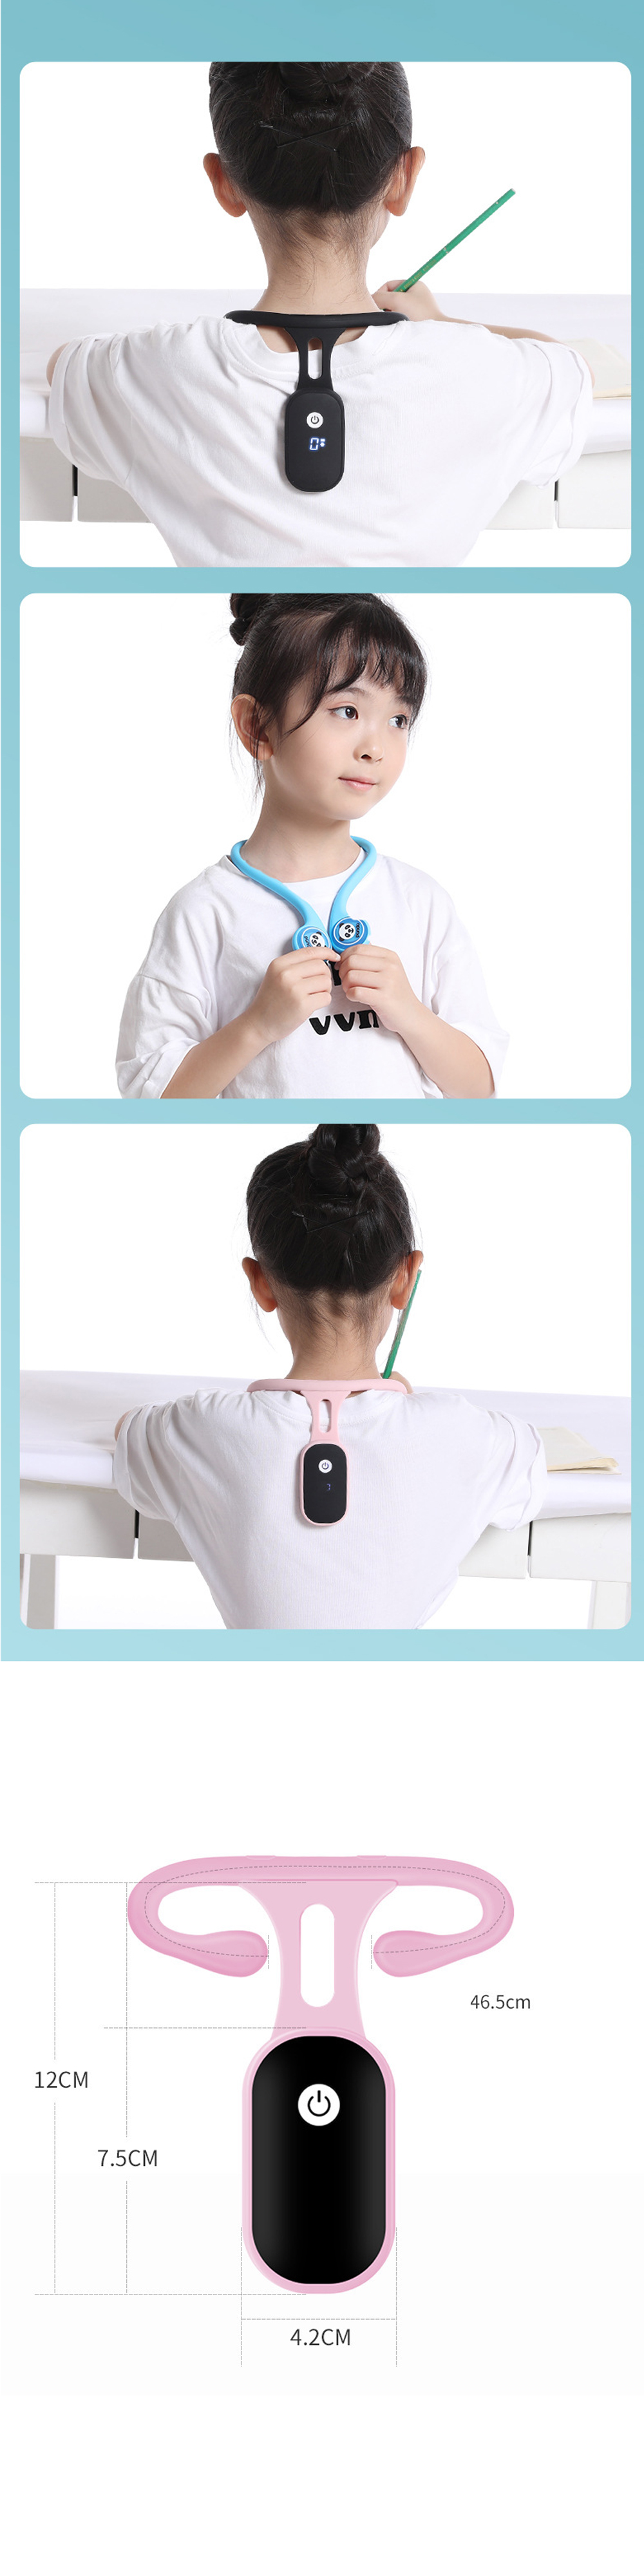 Children-Intelligent-Posture-Corrector-Orthopedic-Device-LCD-Display-Vibration-Reminder-Hunchback-Co-1902077-5